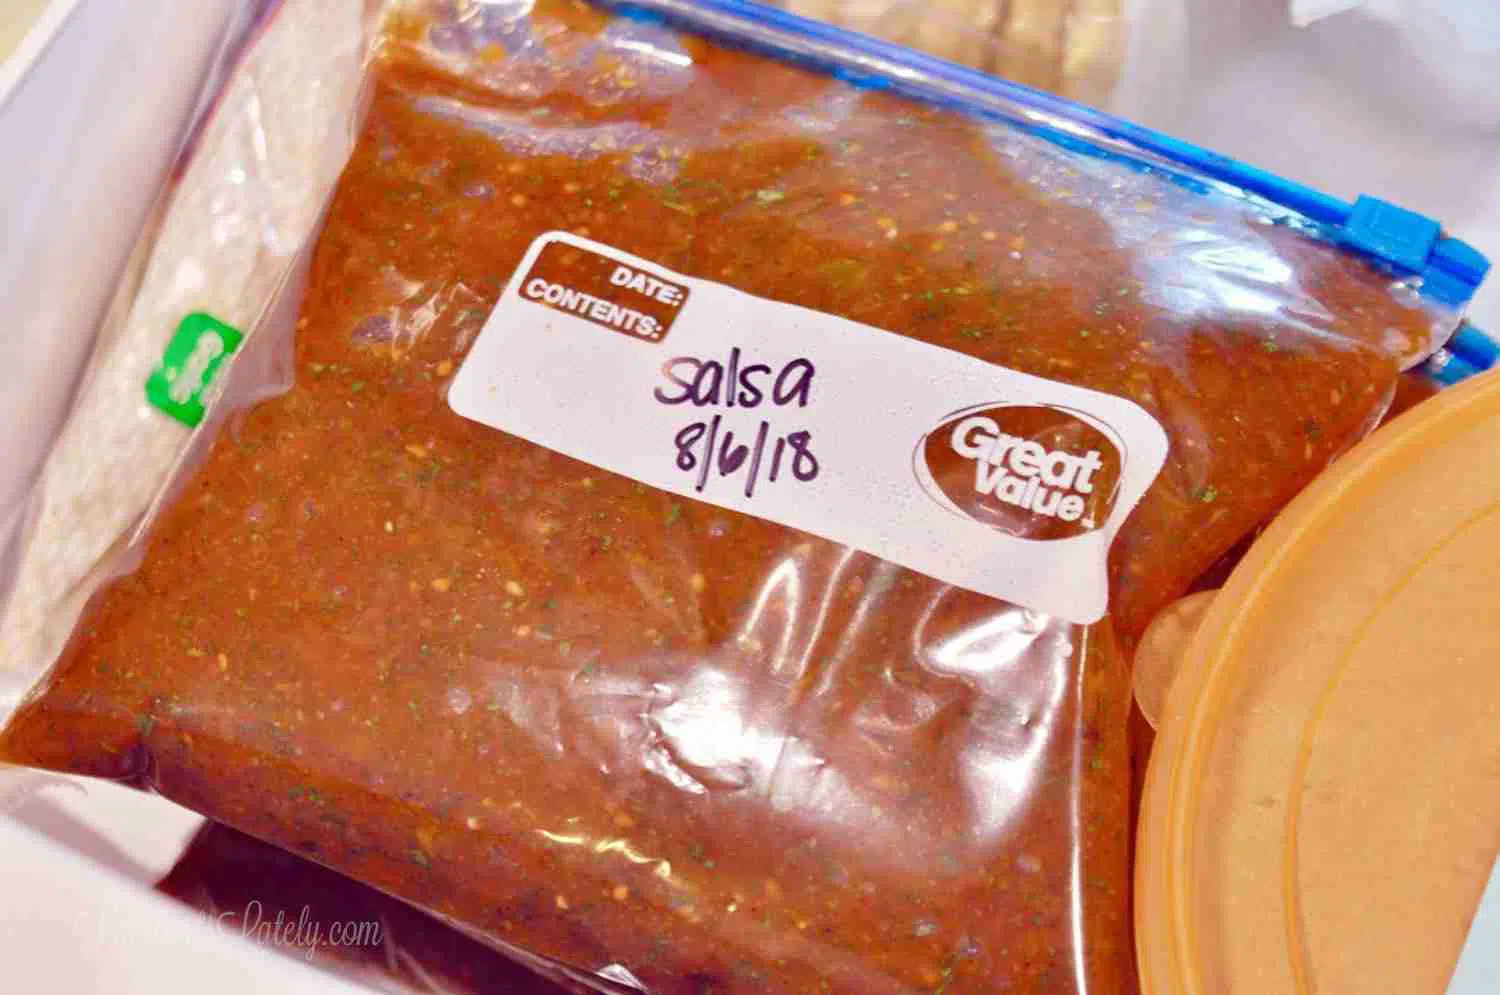 bagged salsa in a freezer